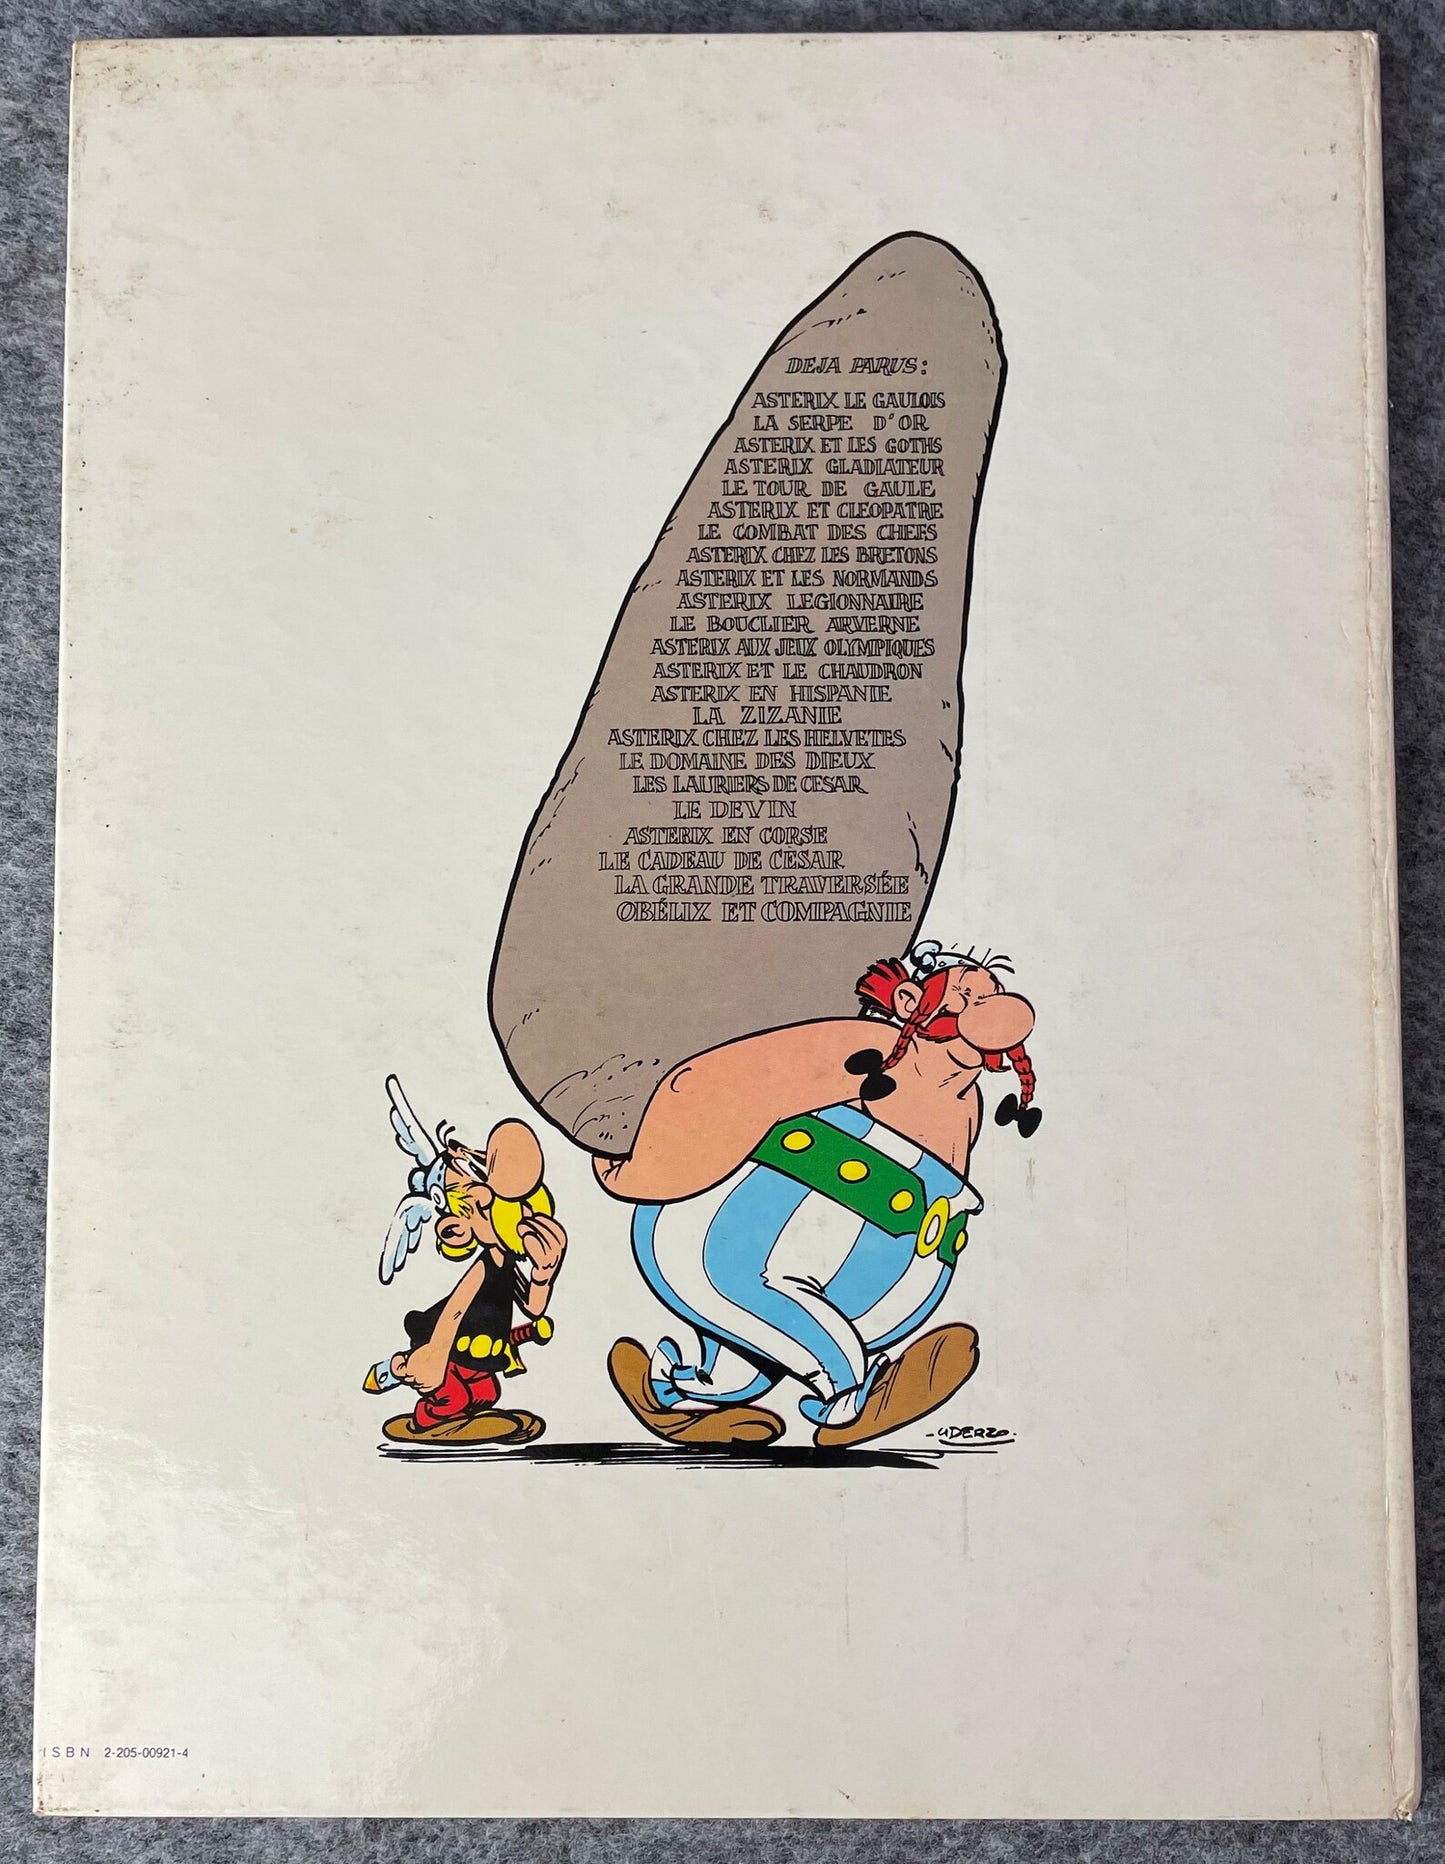 Obélix et Compagnie 1976 1st Belgian Edition Dargaud Hardback Asterix Book EO